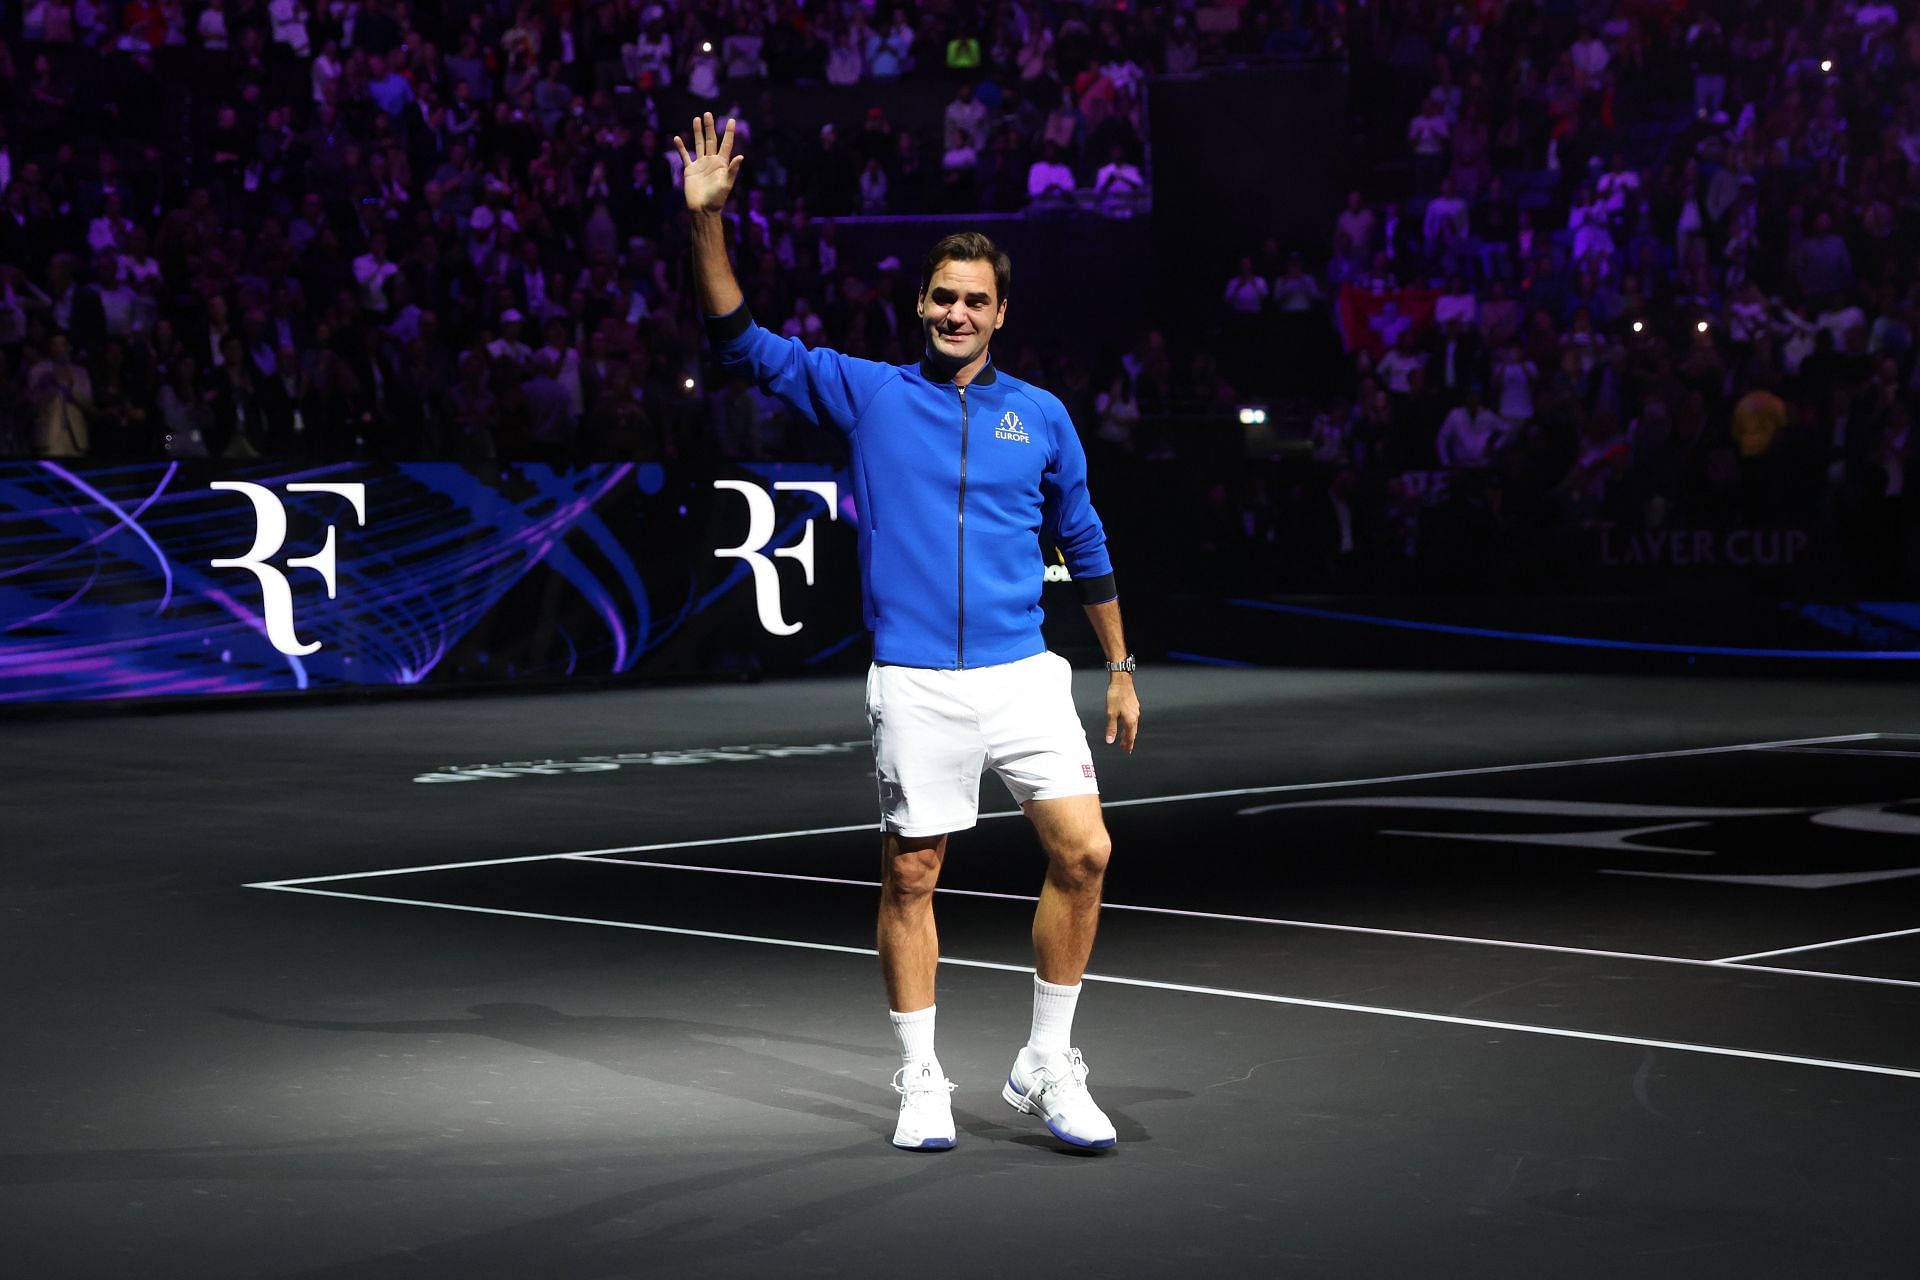 Roger Federer acknowledging the fans after his last match